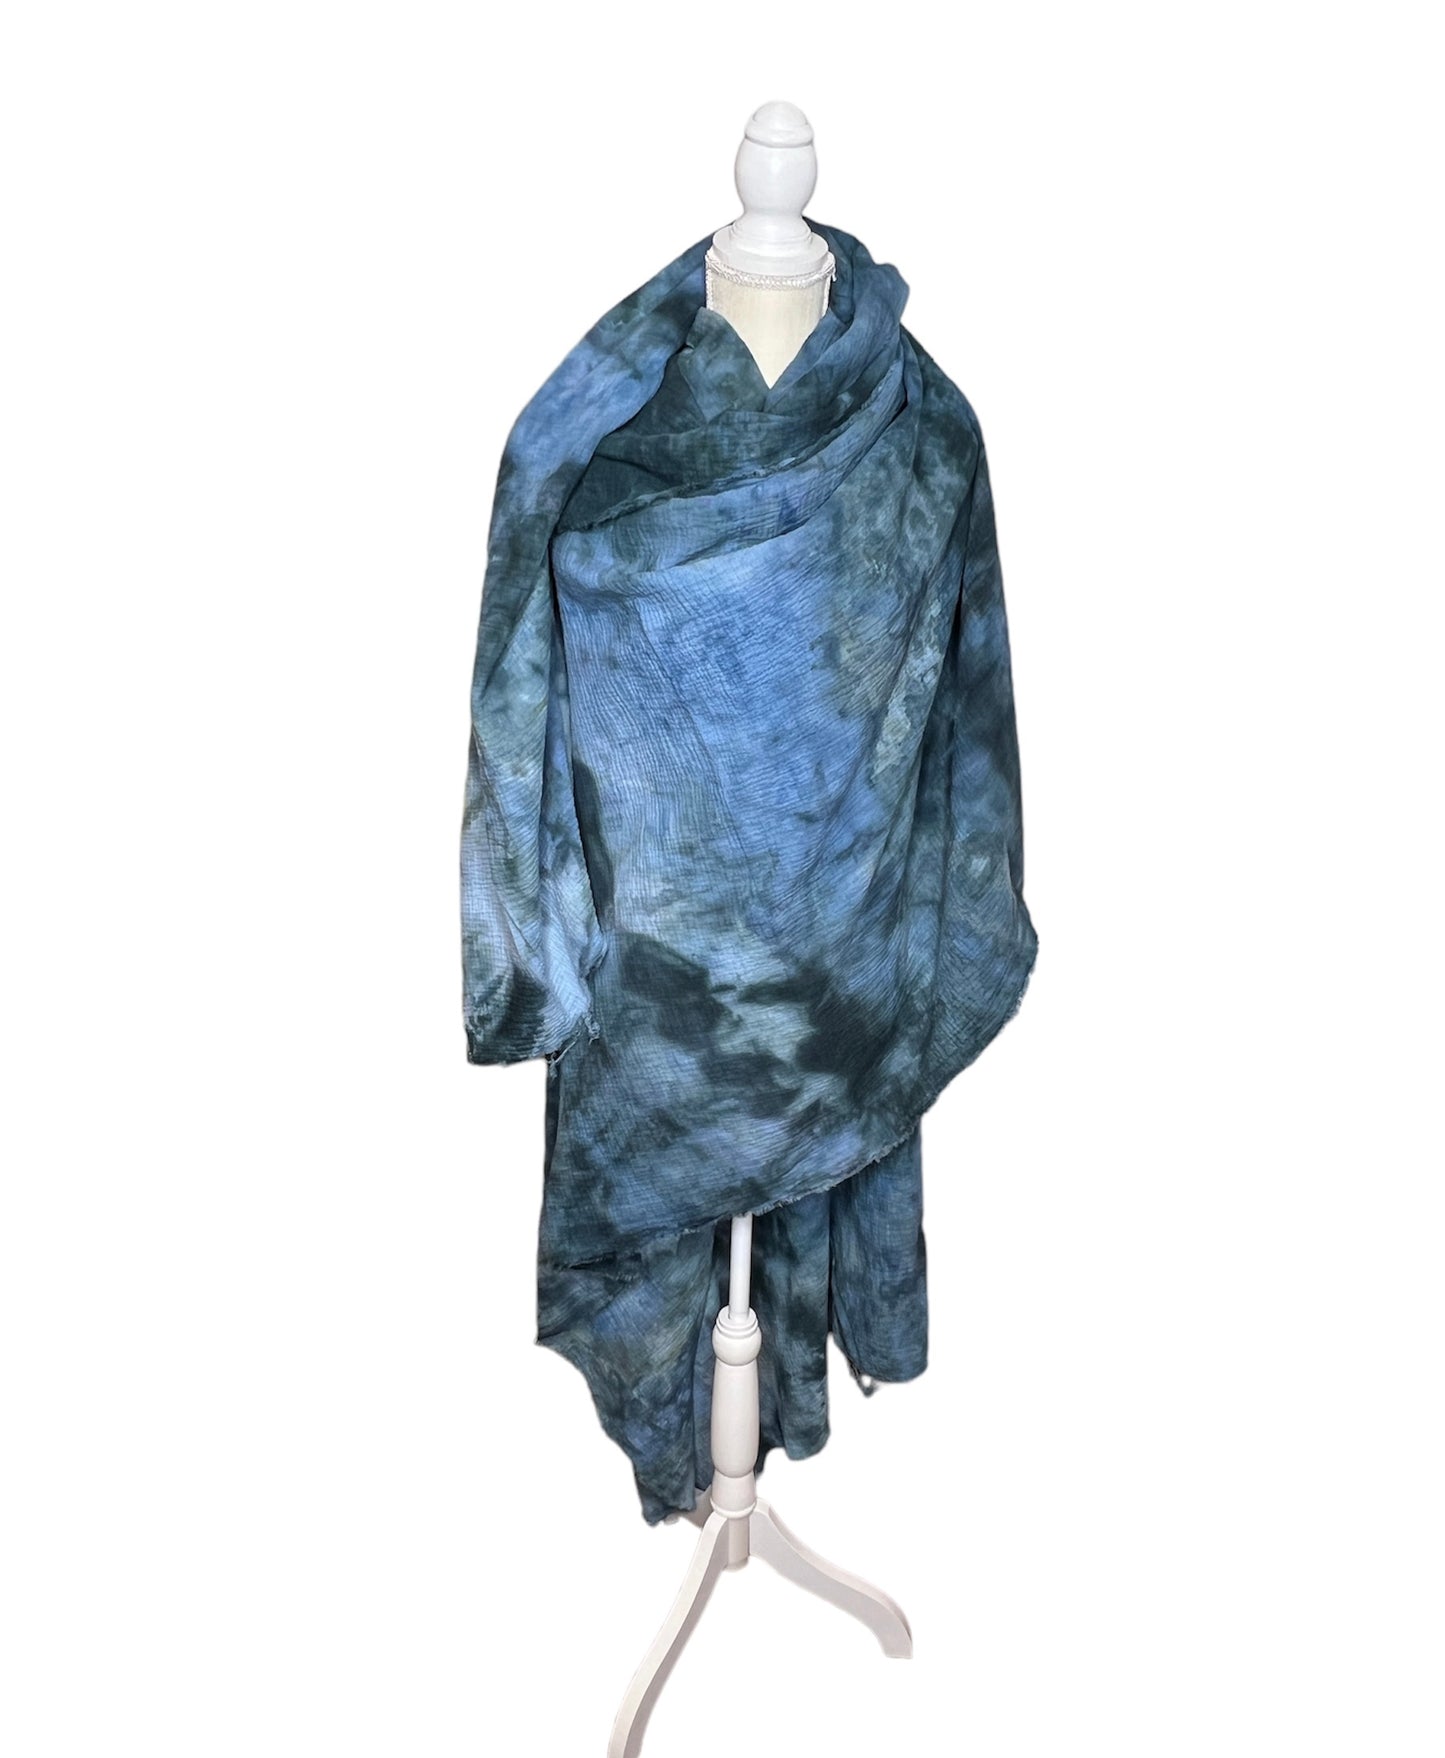 Moonstone Shawl - Meditation Blanket